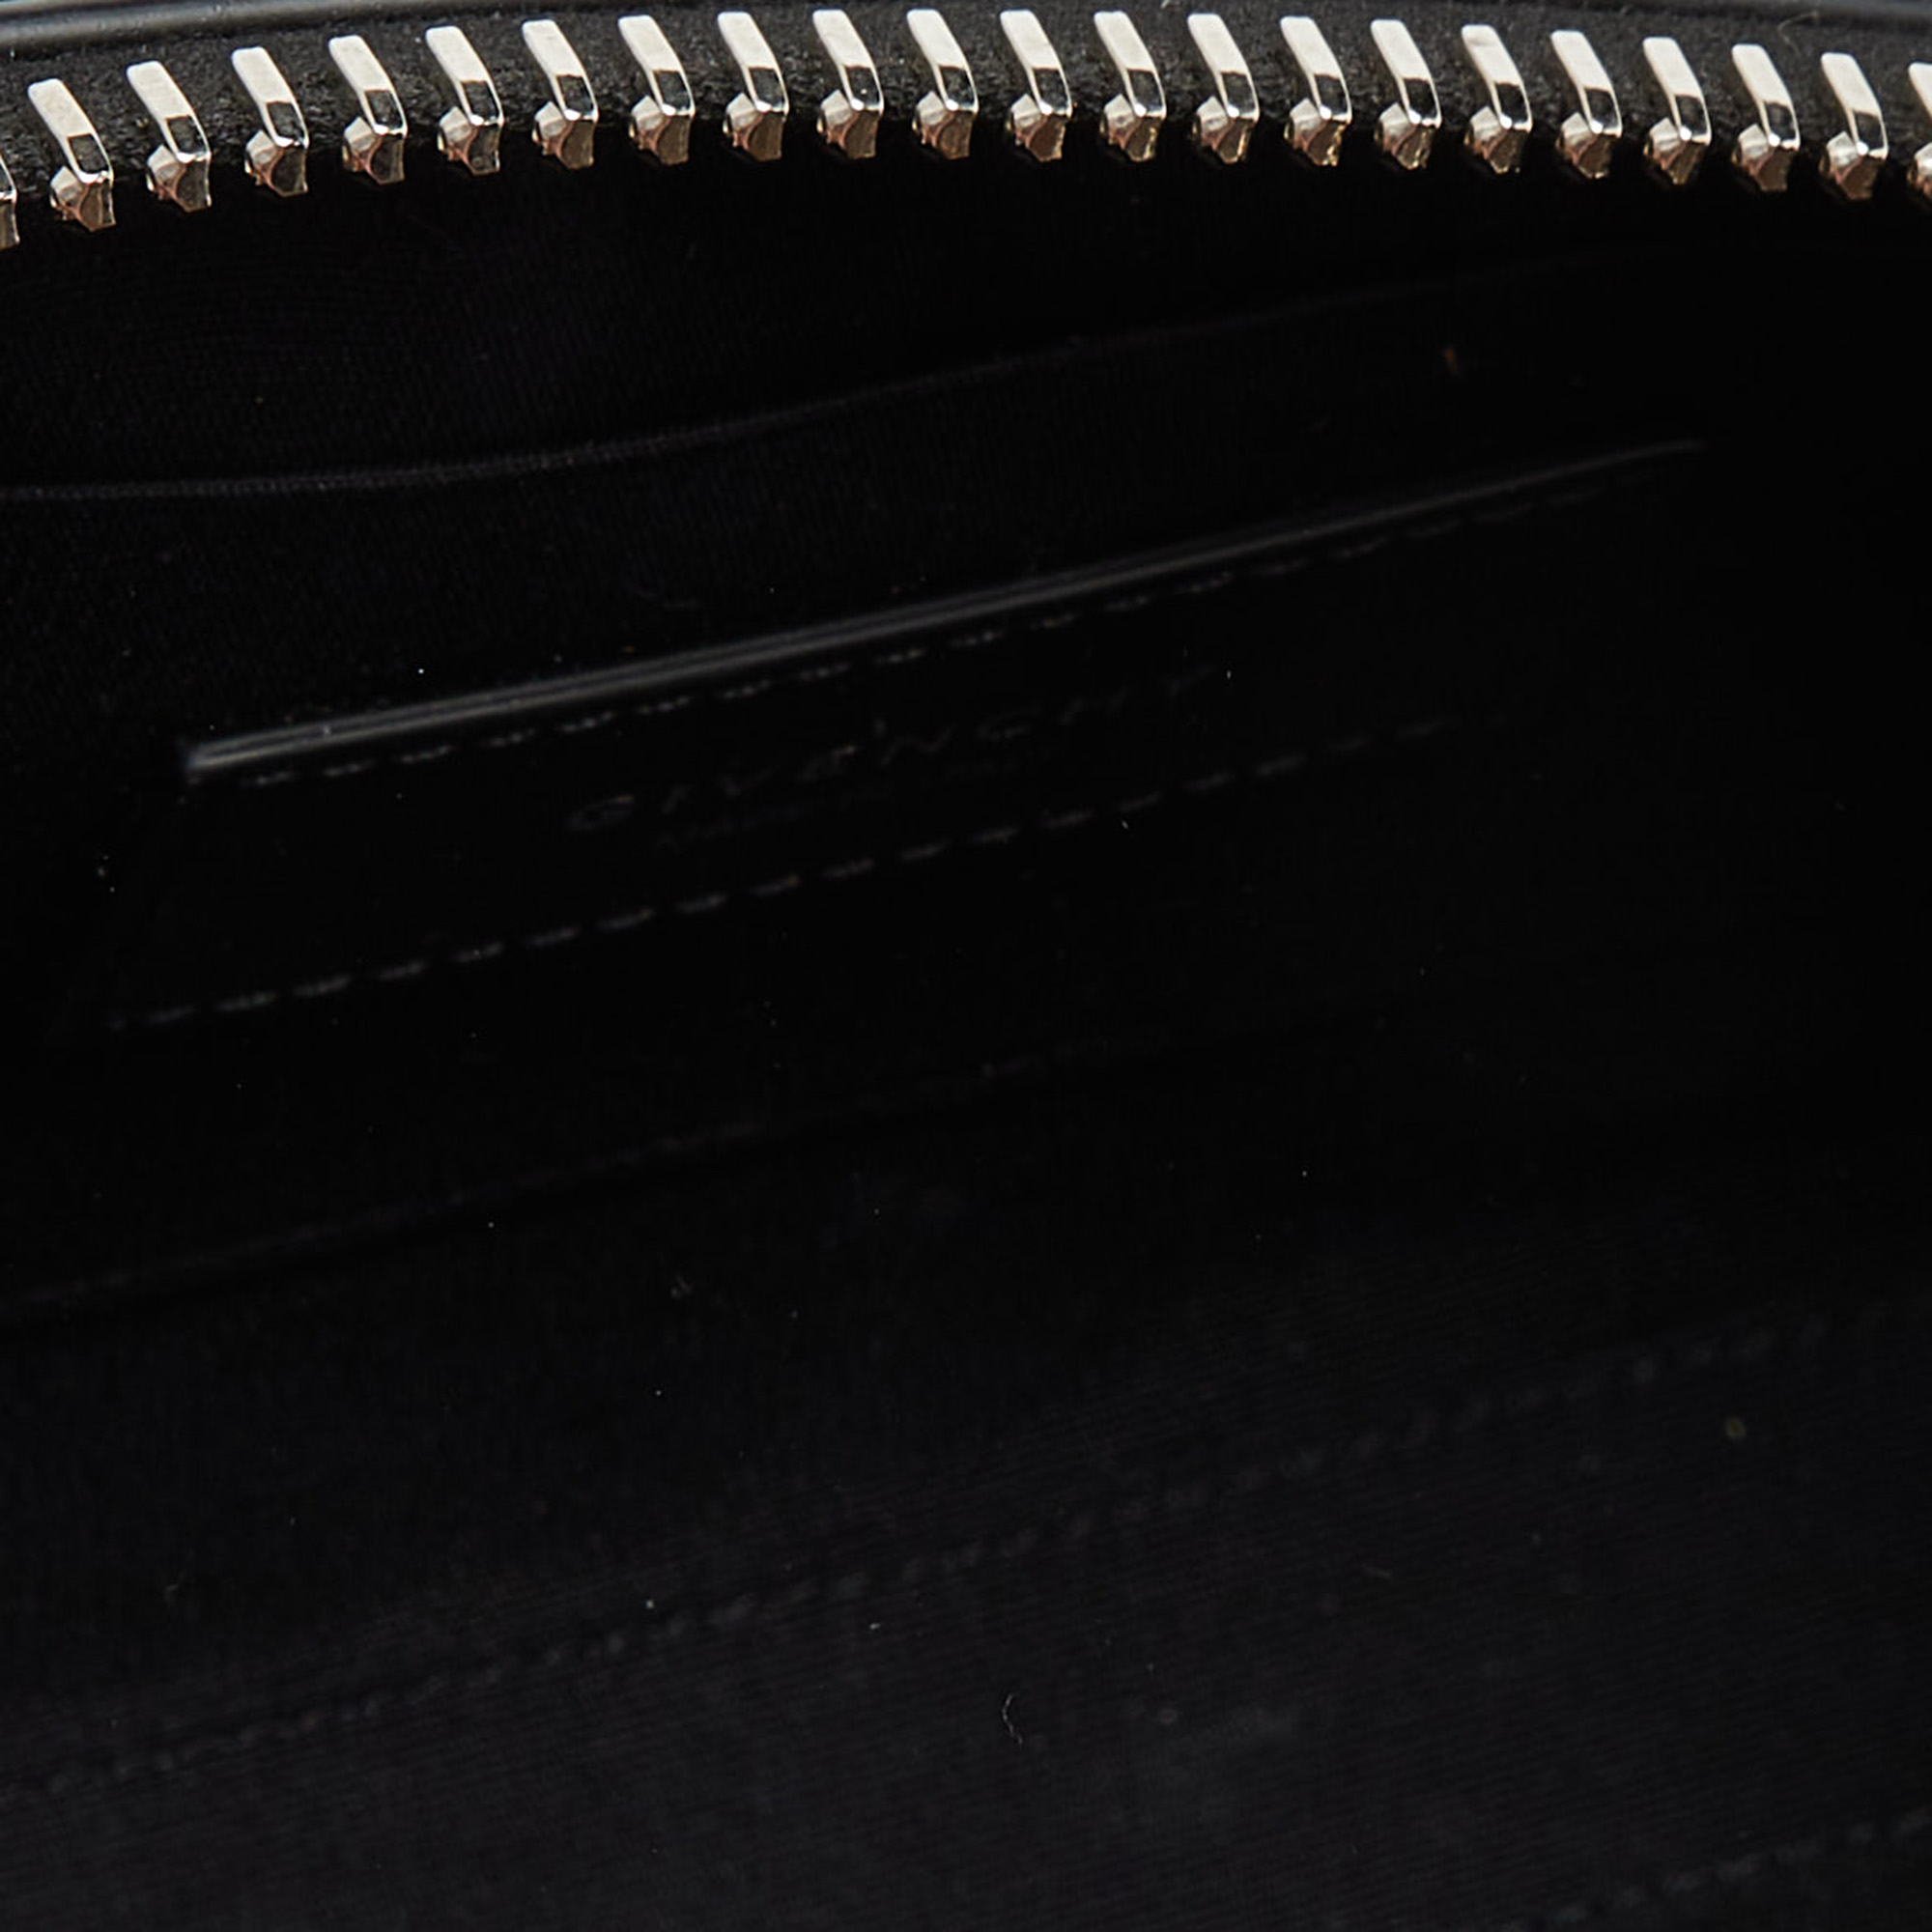 Givenchy Black Leather Antigona Sling Bag